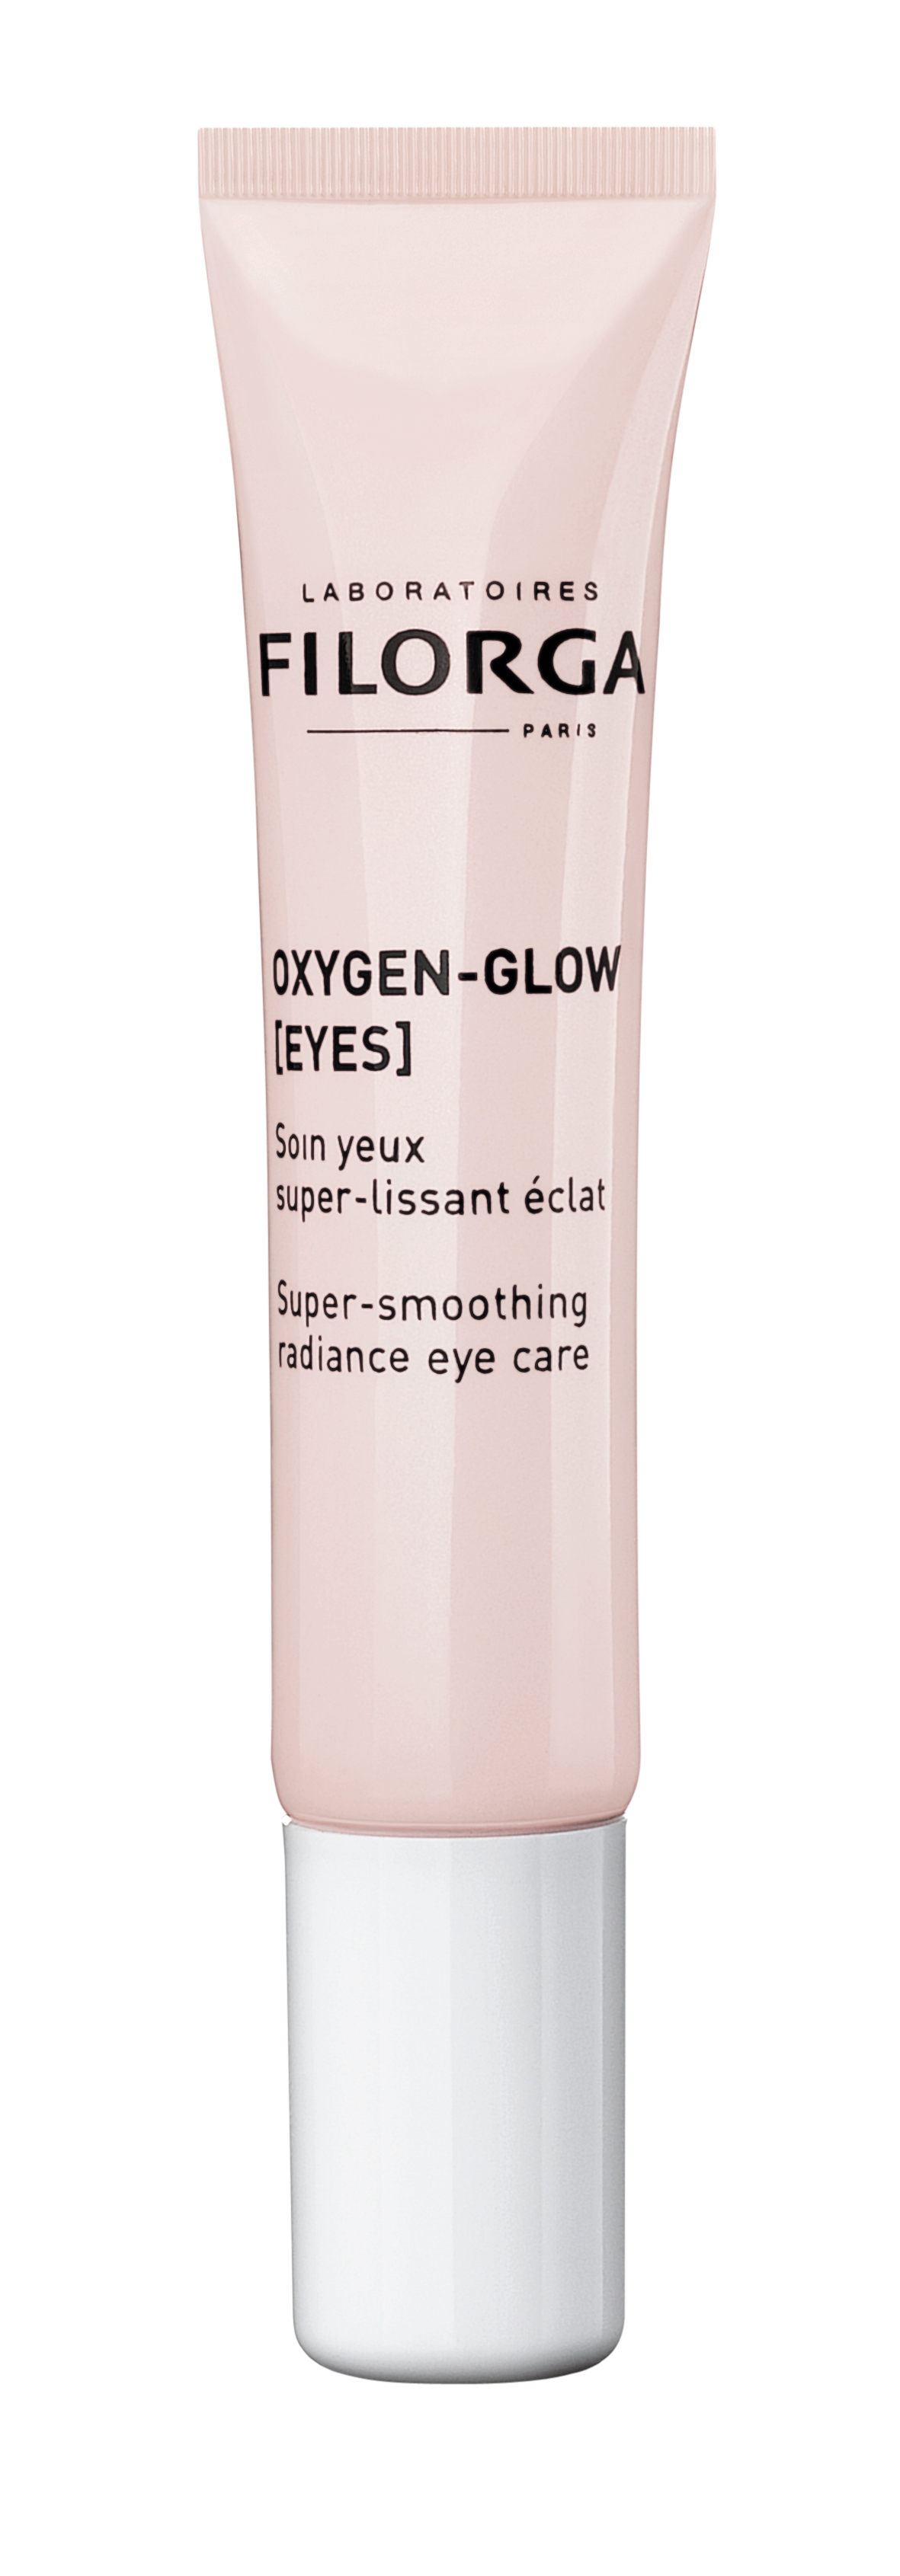 Oxygen-Glow Eye Cream